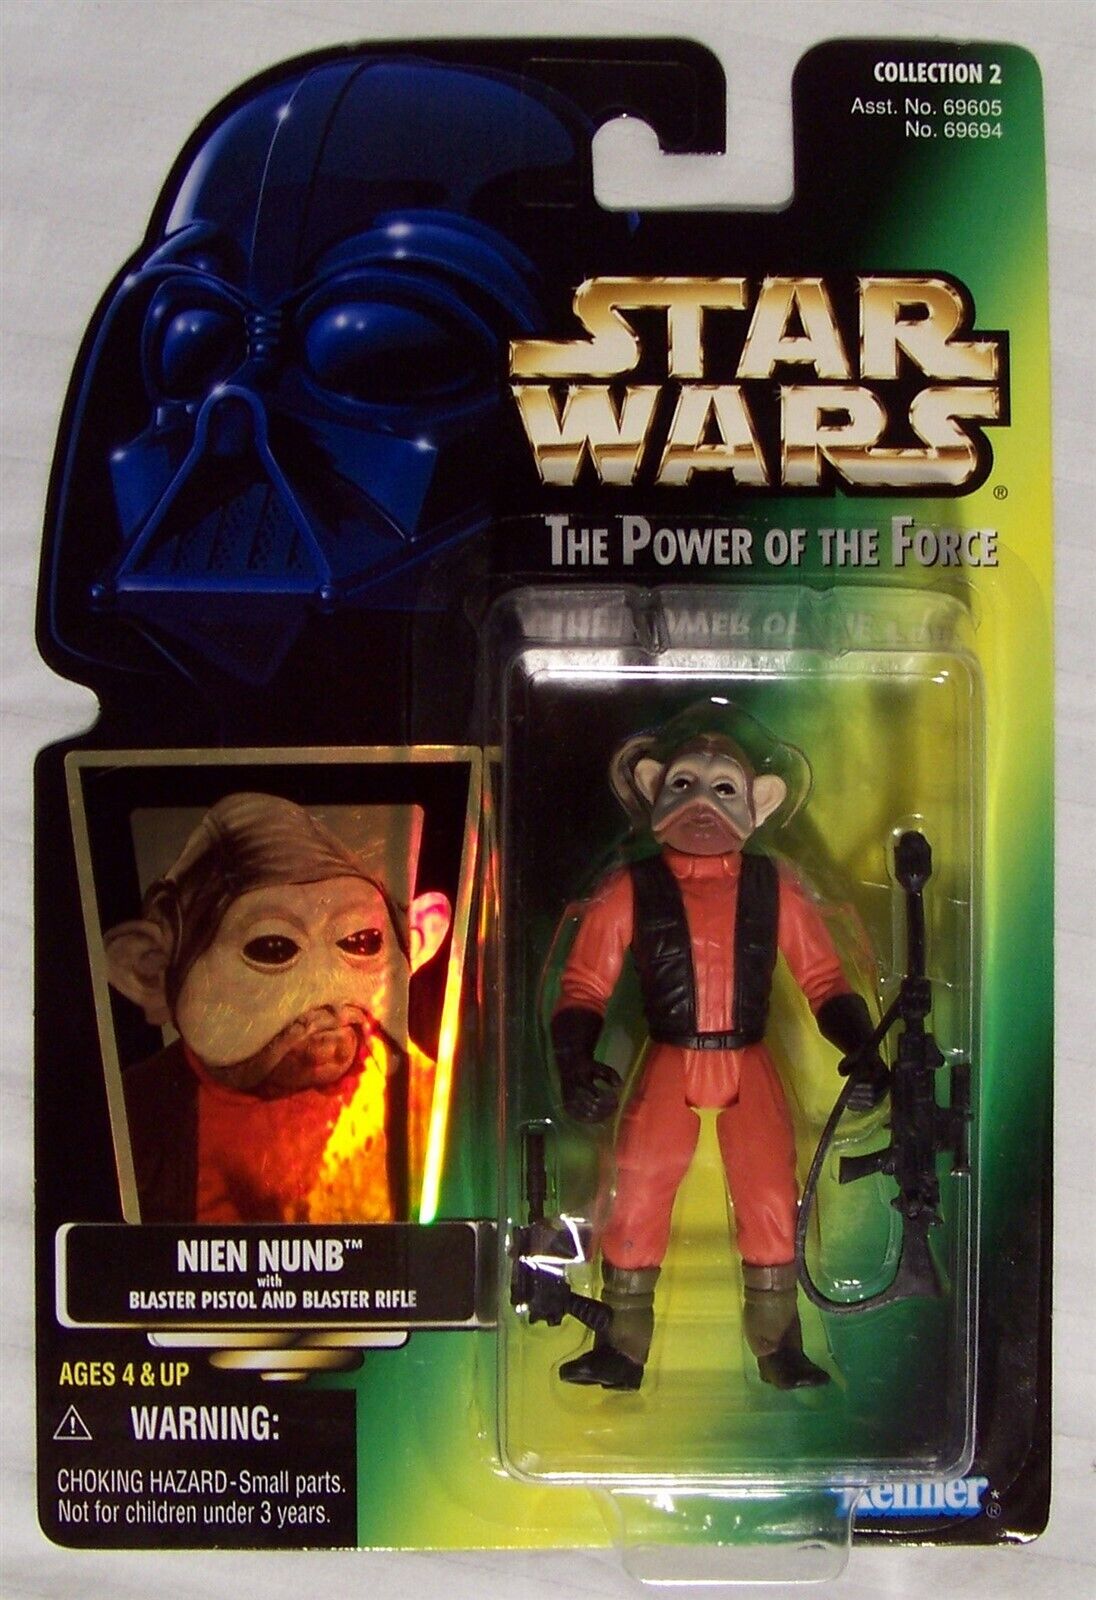 Hasbro - Nien Nunb - Star Wars - POTF Green Card - Action Figure - MOC